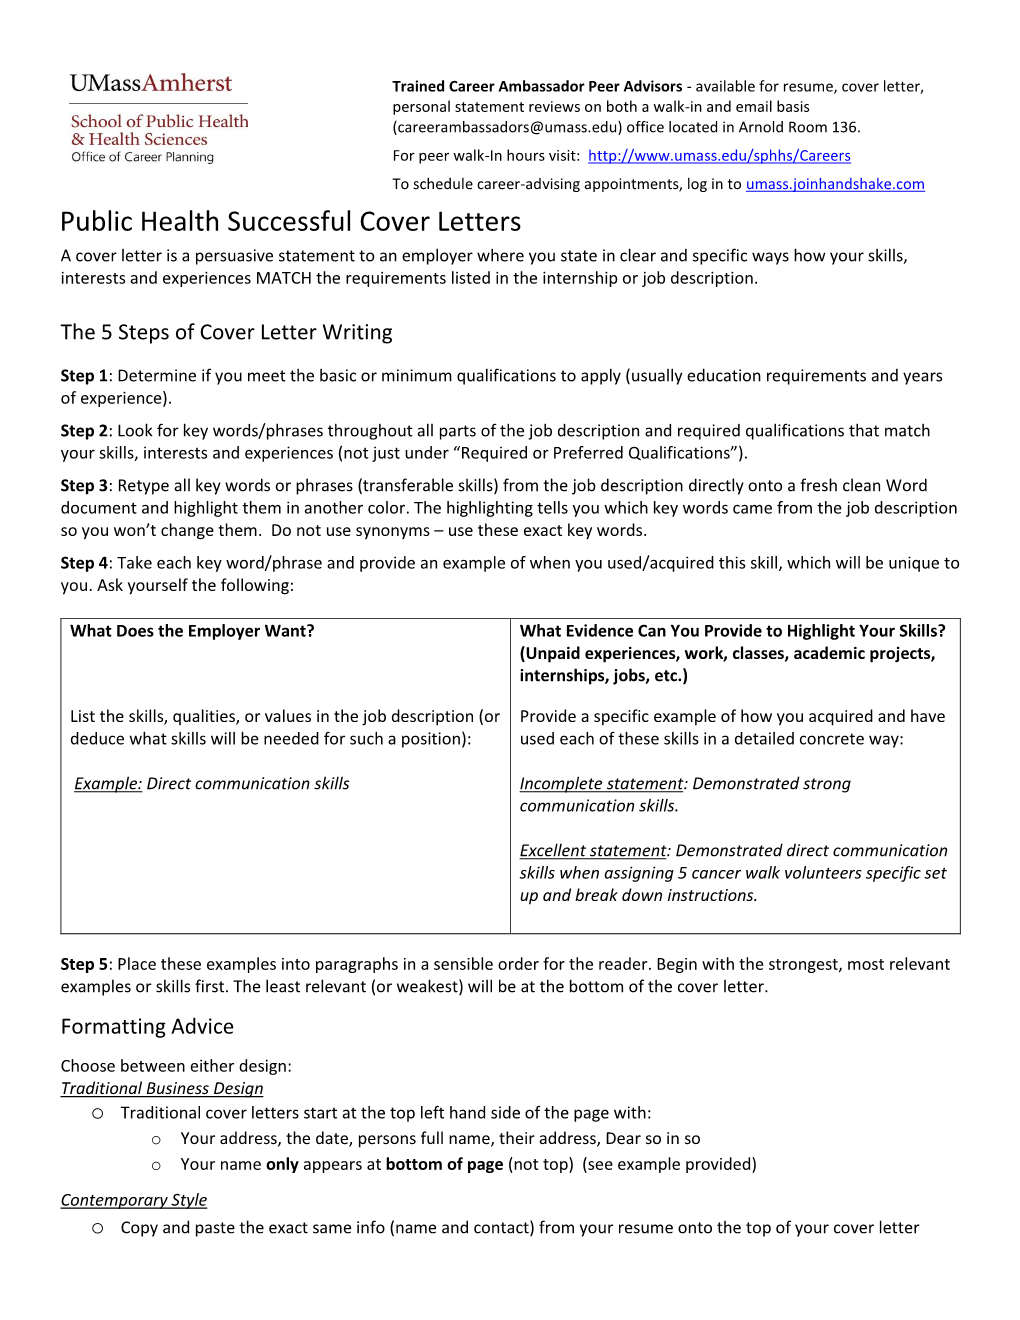 Public Health Successful Cover Letters